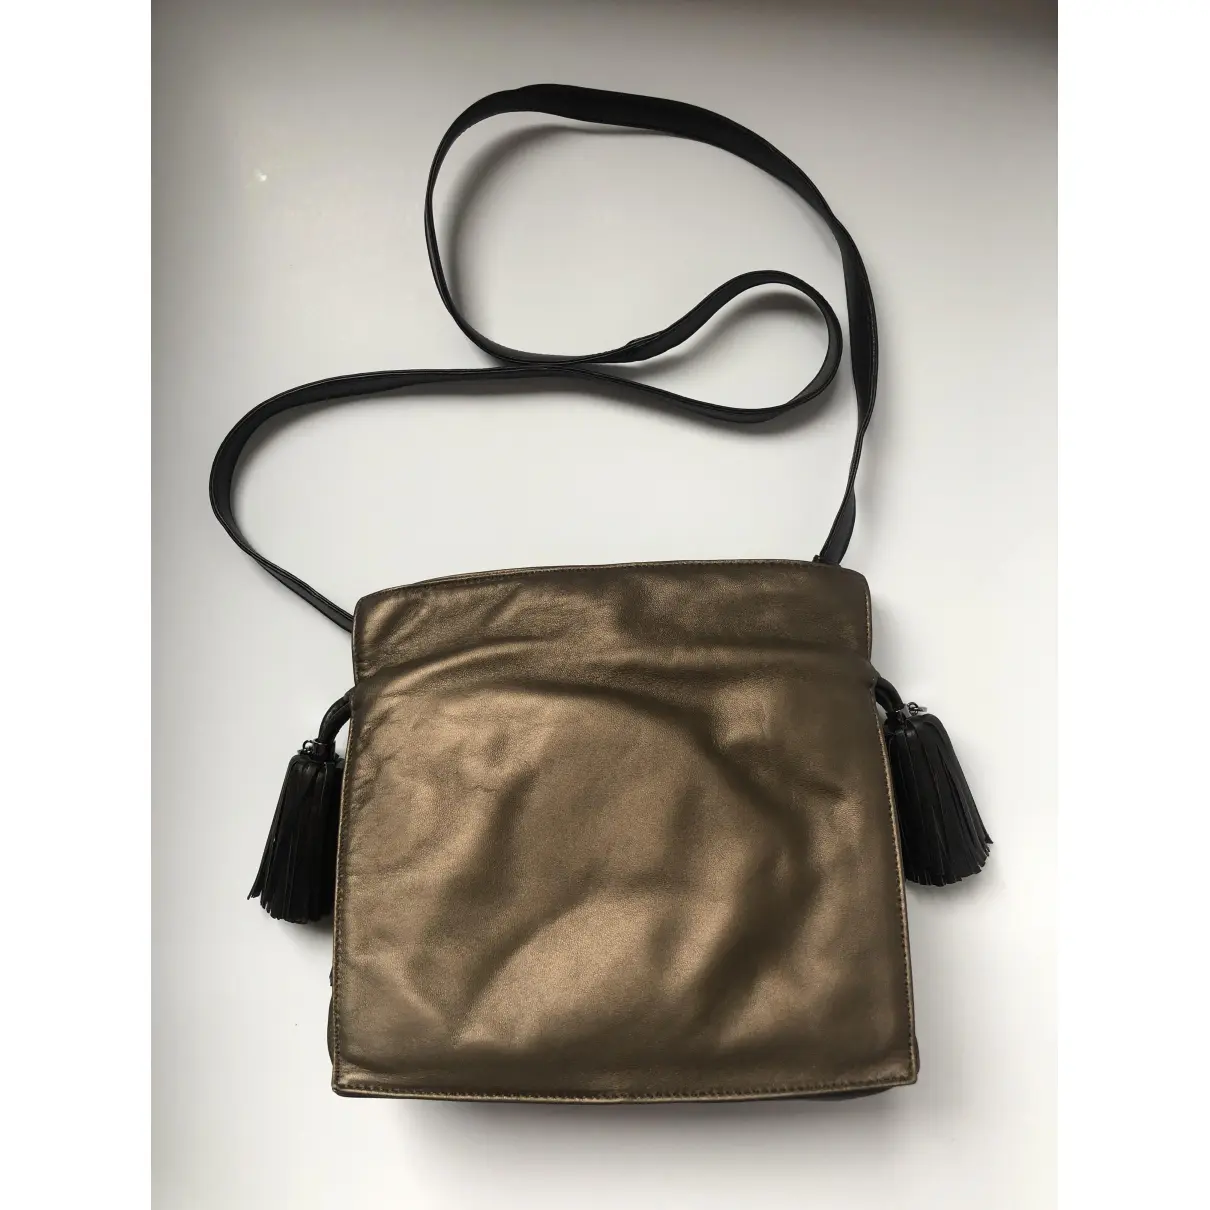 Buy Loewe Flamenco leather handbag online